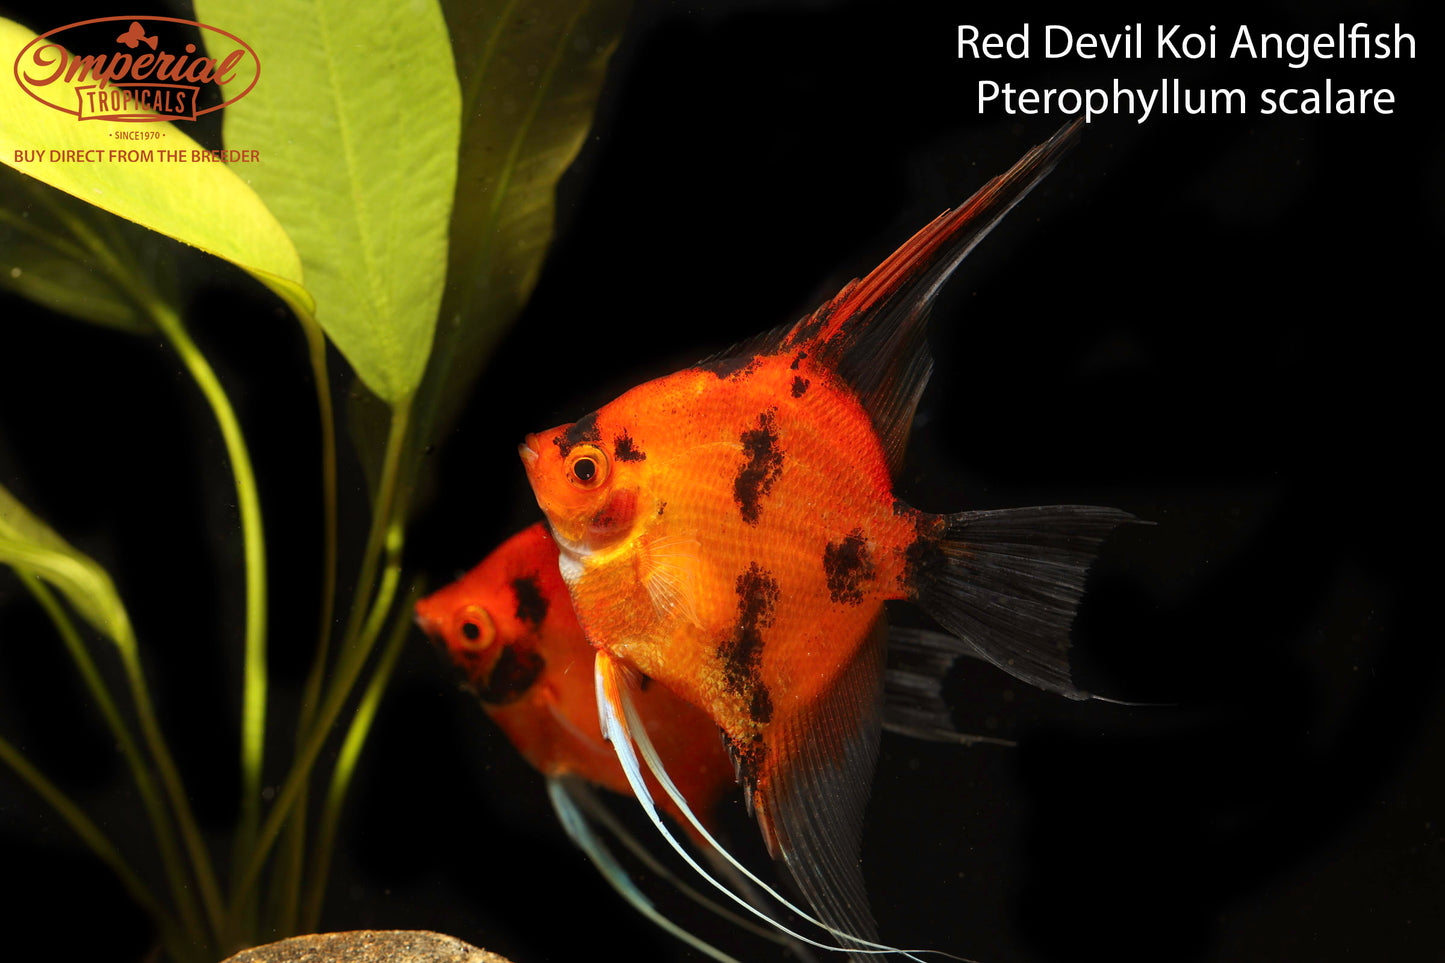 Red Devil Koi Angelfish